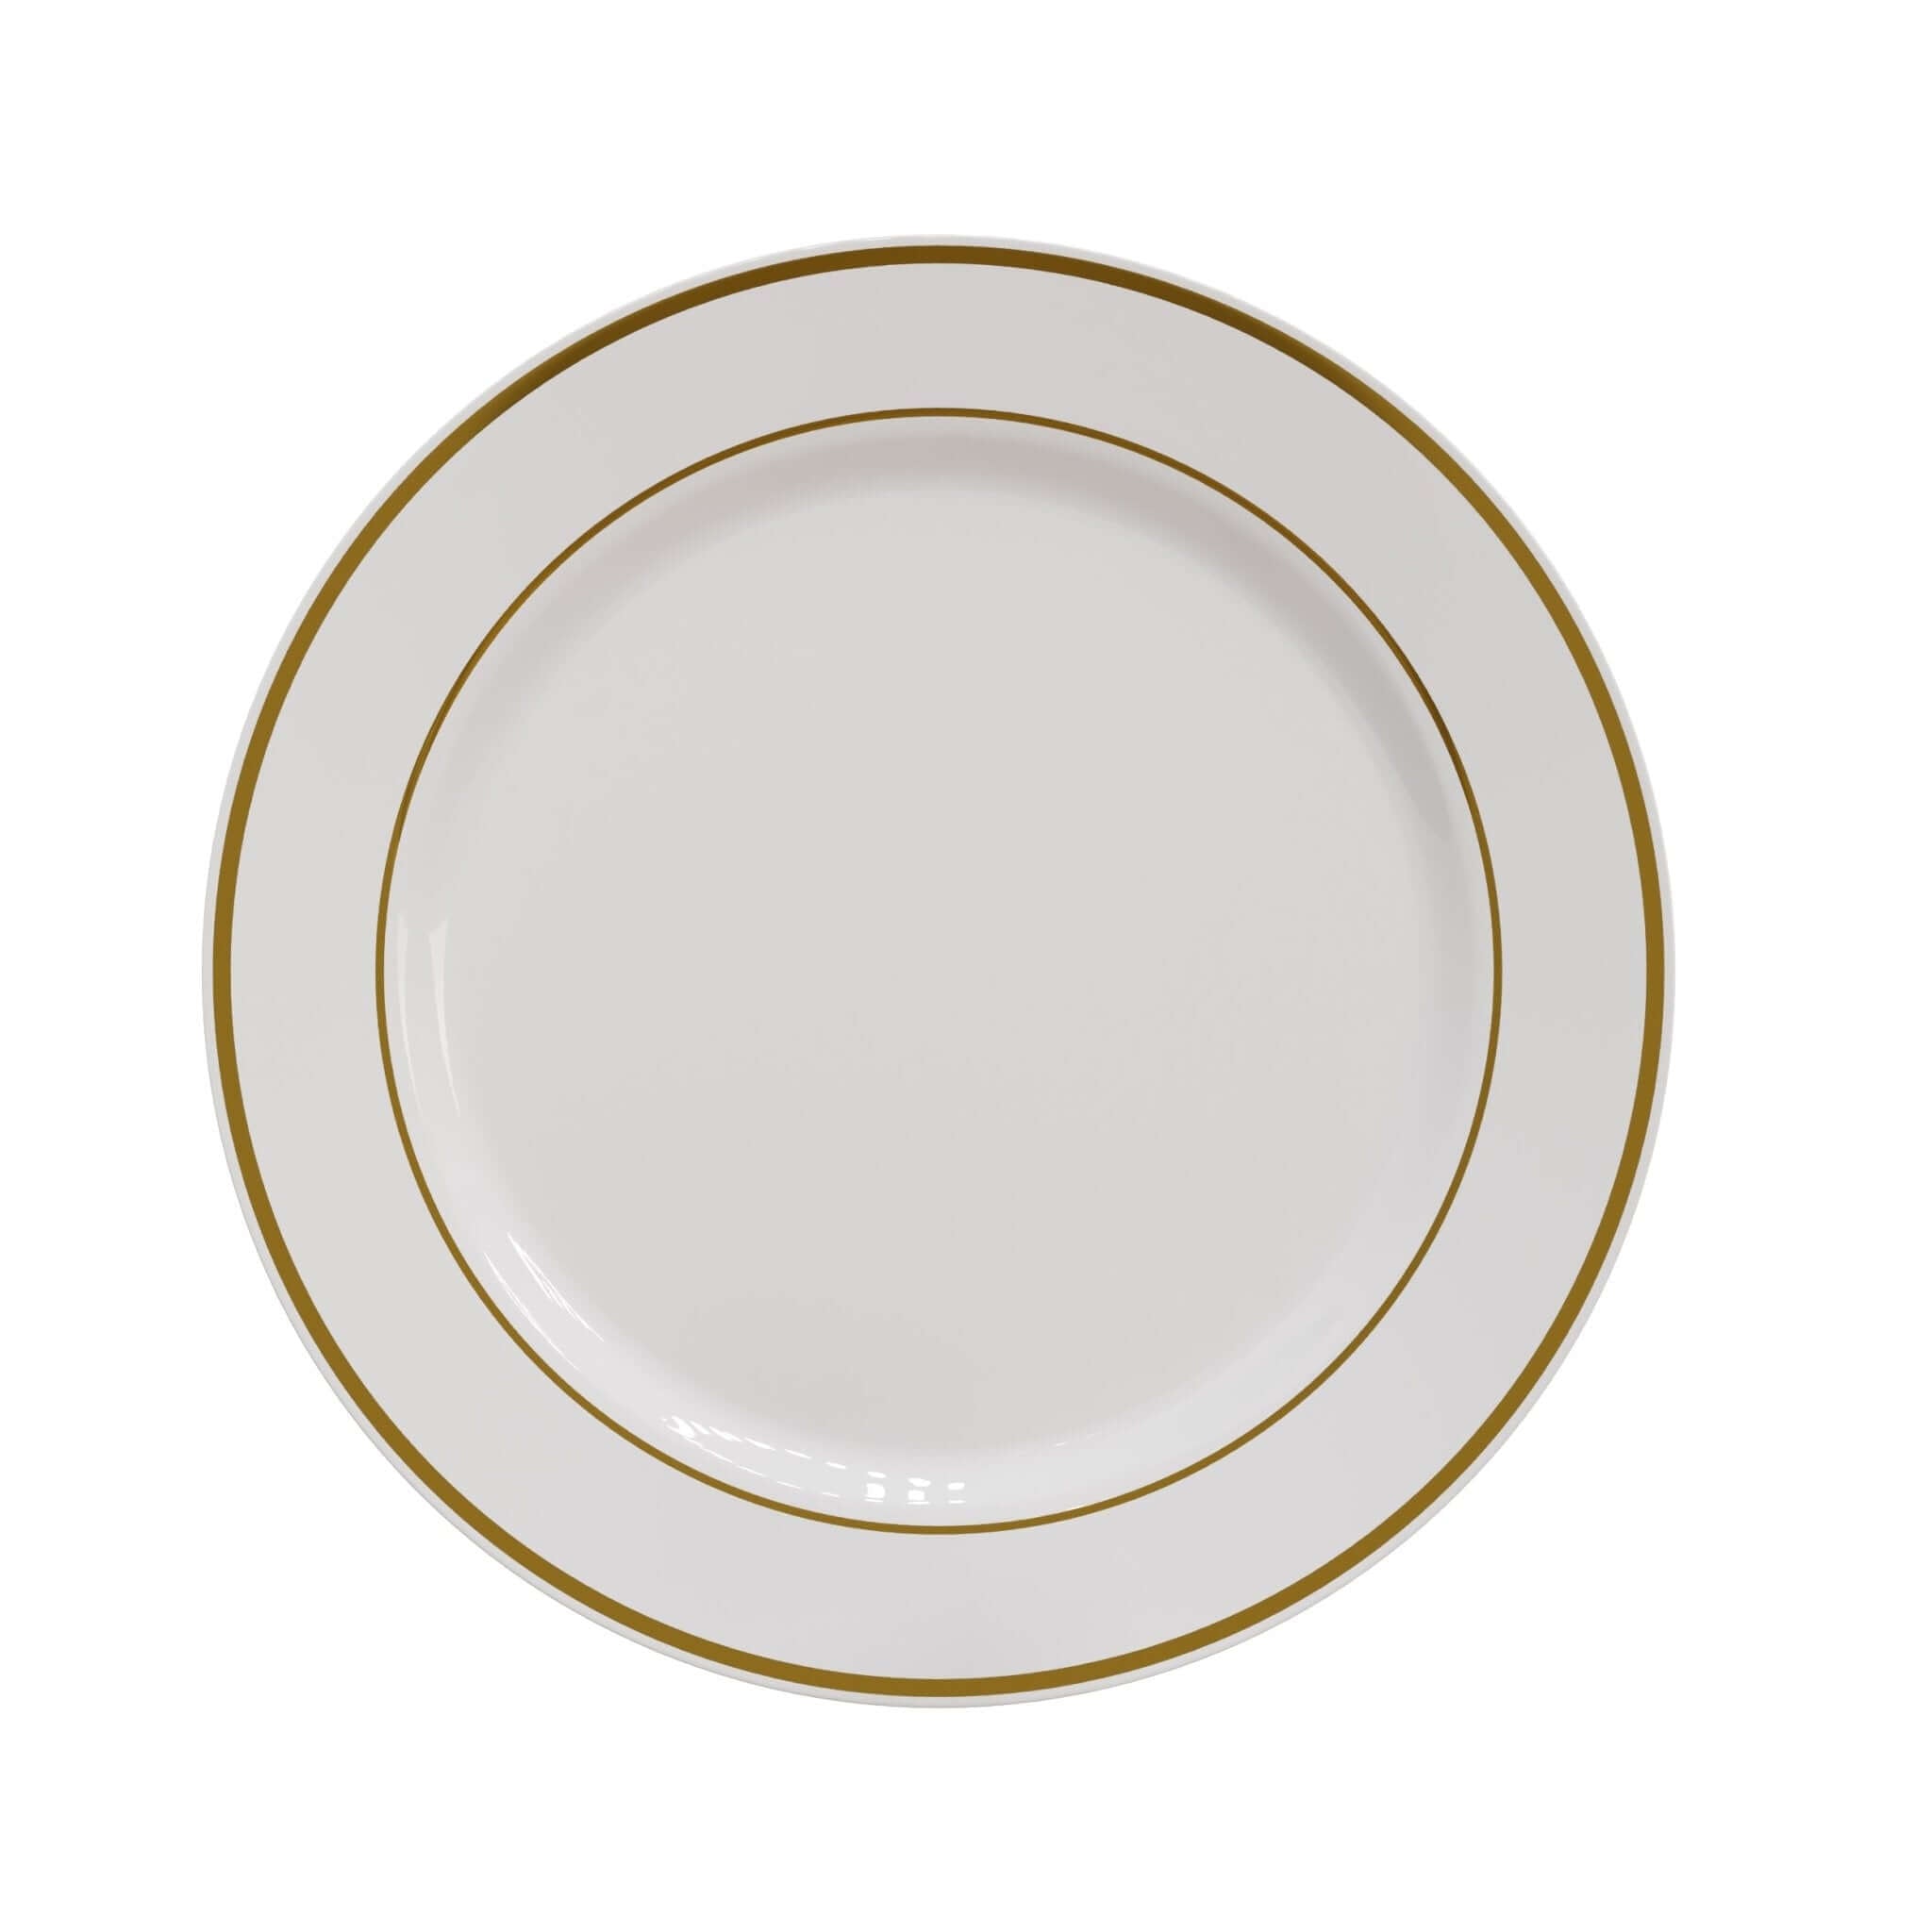 10.25" Cream/Gold Line Design Plastic Plates (120 Count) - Yom Tov Settings